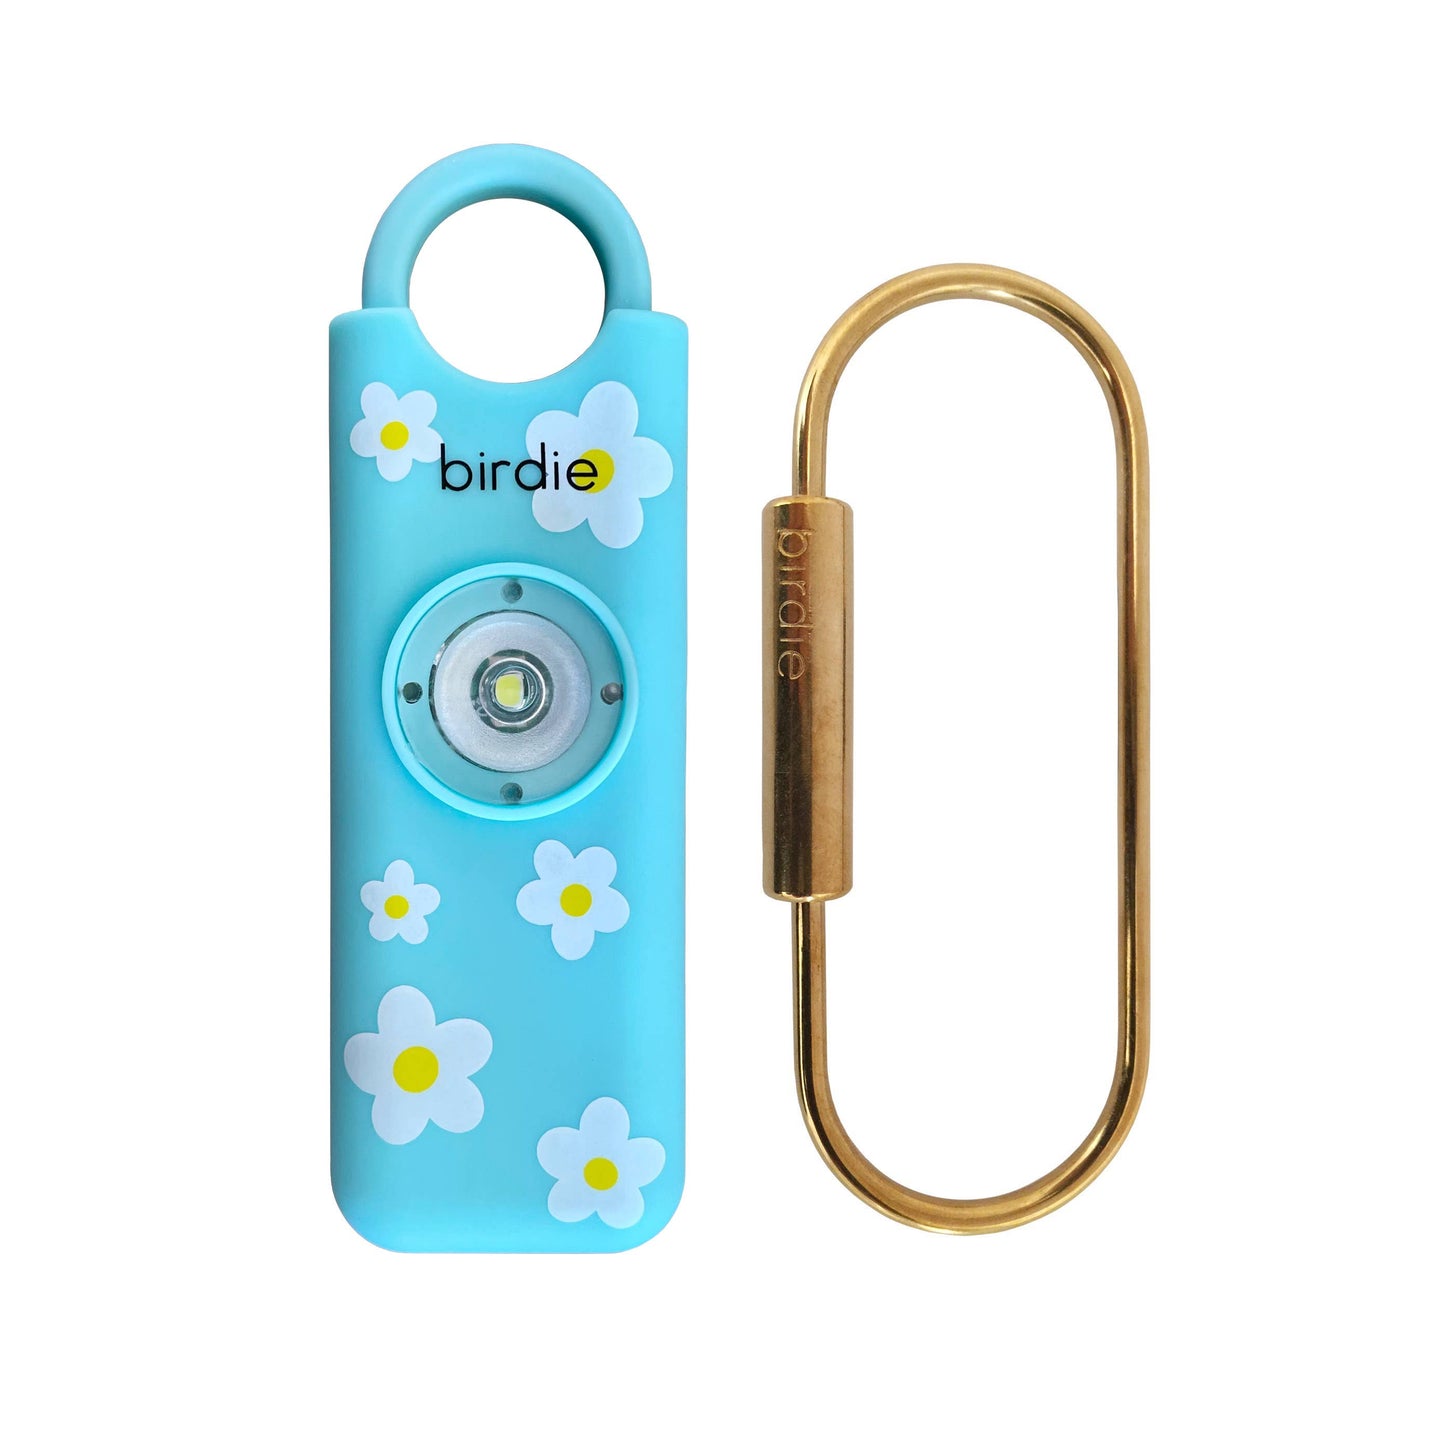 She's Birdie Personal Safety Alarm: Single / Lavender